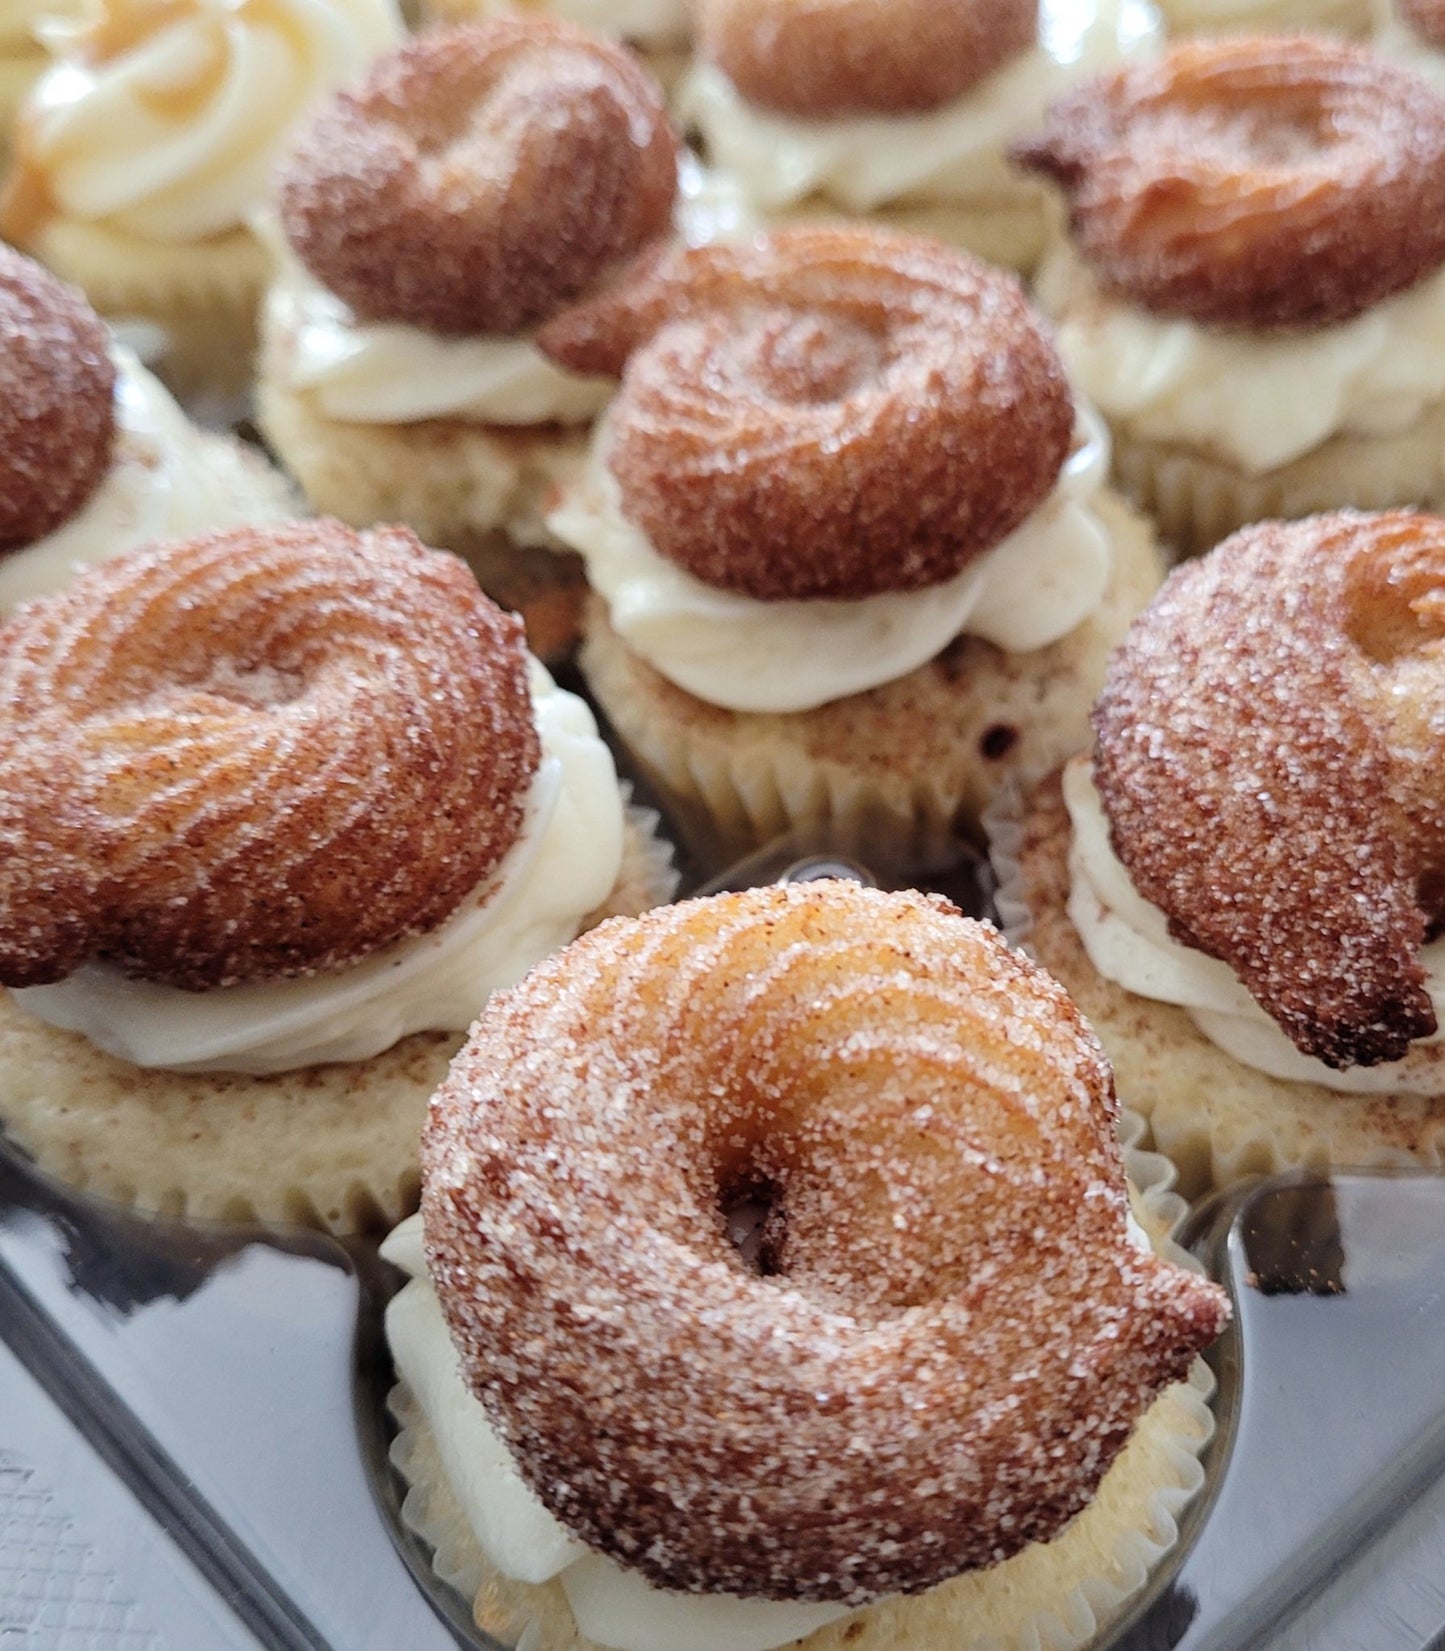 6 Count Cupcake Box - Elegant Impressions Bakery